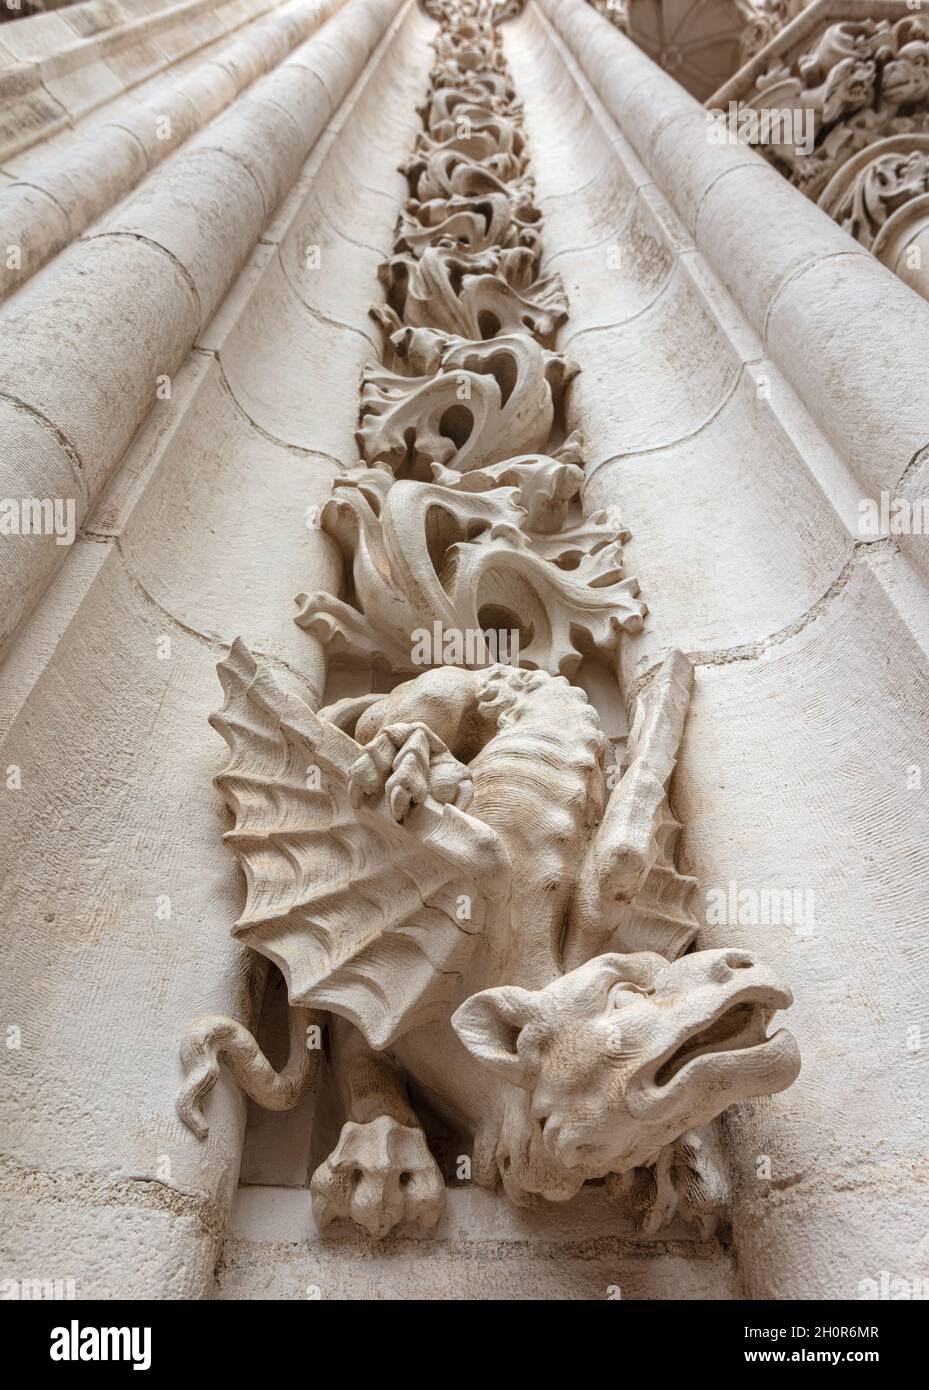 Seville Cathedral. Catedral de Sevilla Stock Photo